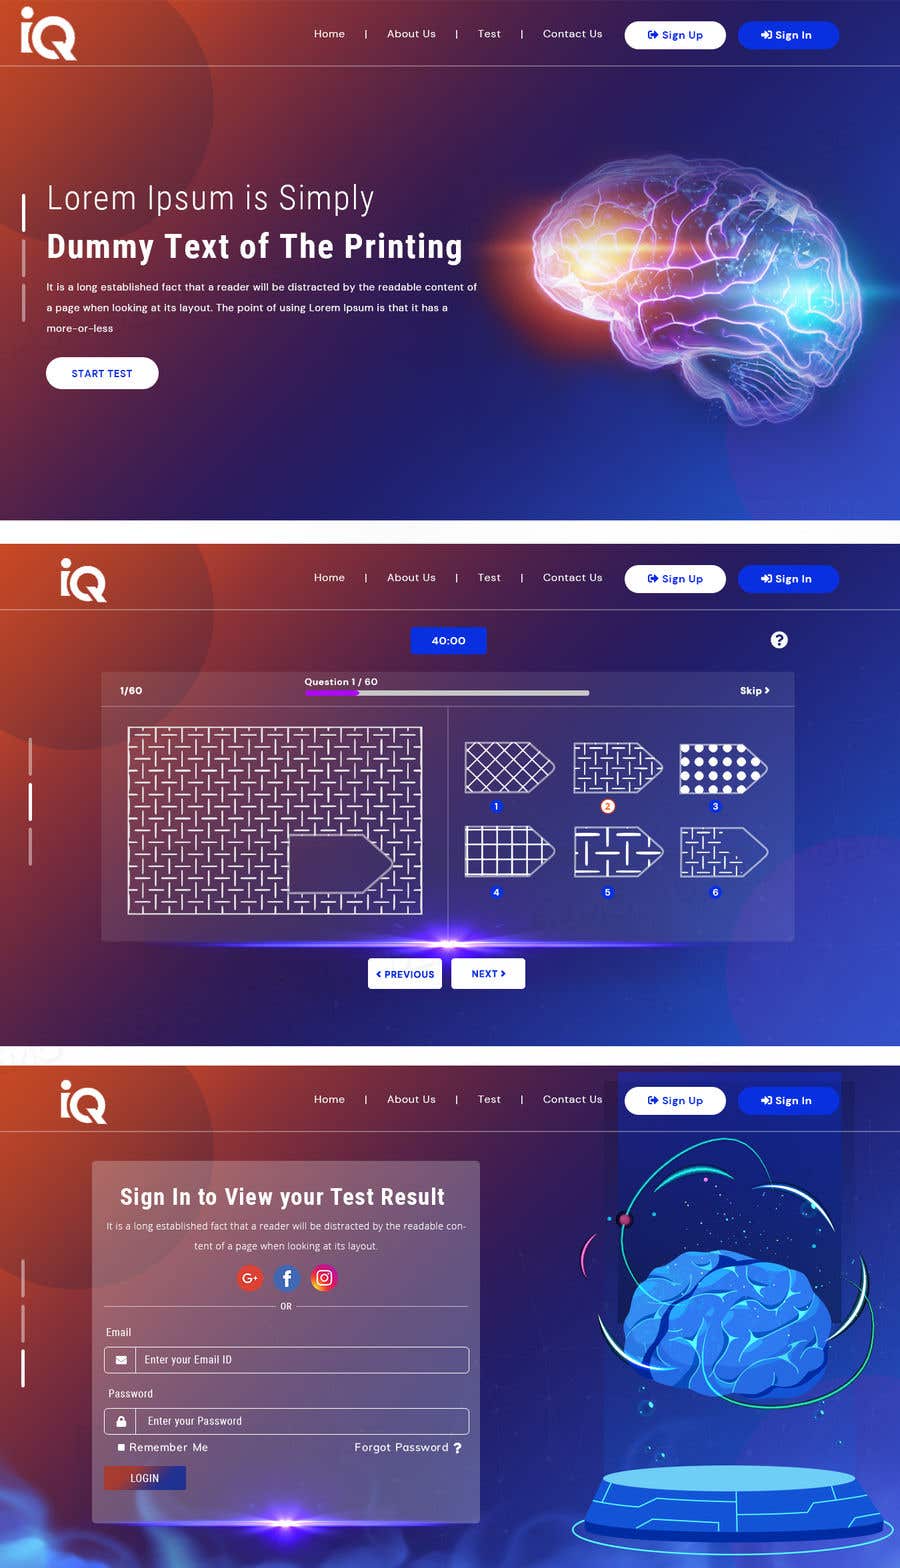 
                                                                                                                        Konkurrenceindlæg #                                            91
                                         for                                             Design nice user interface for an IQ test website
                                        